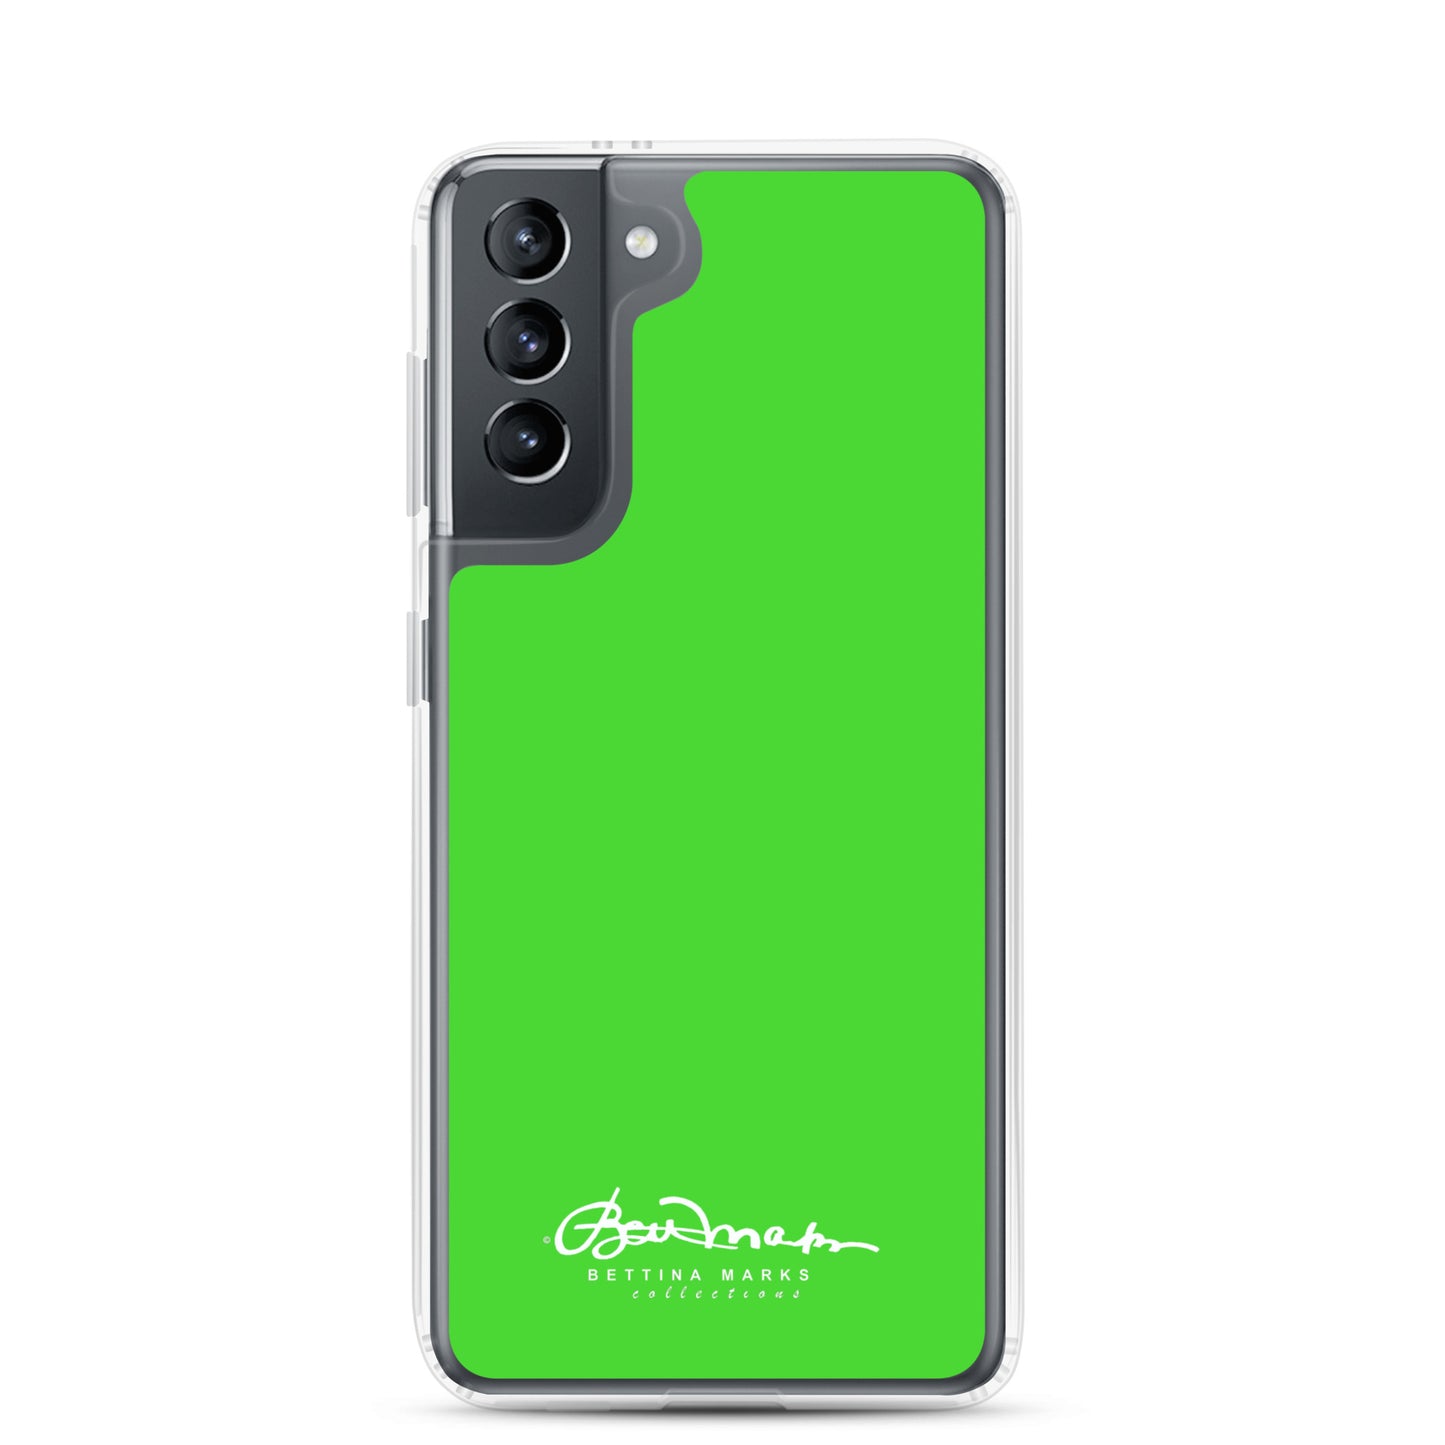 Bright Green Samsung Case (select model)